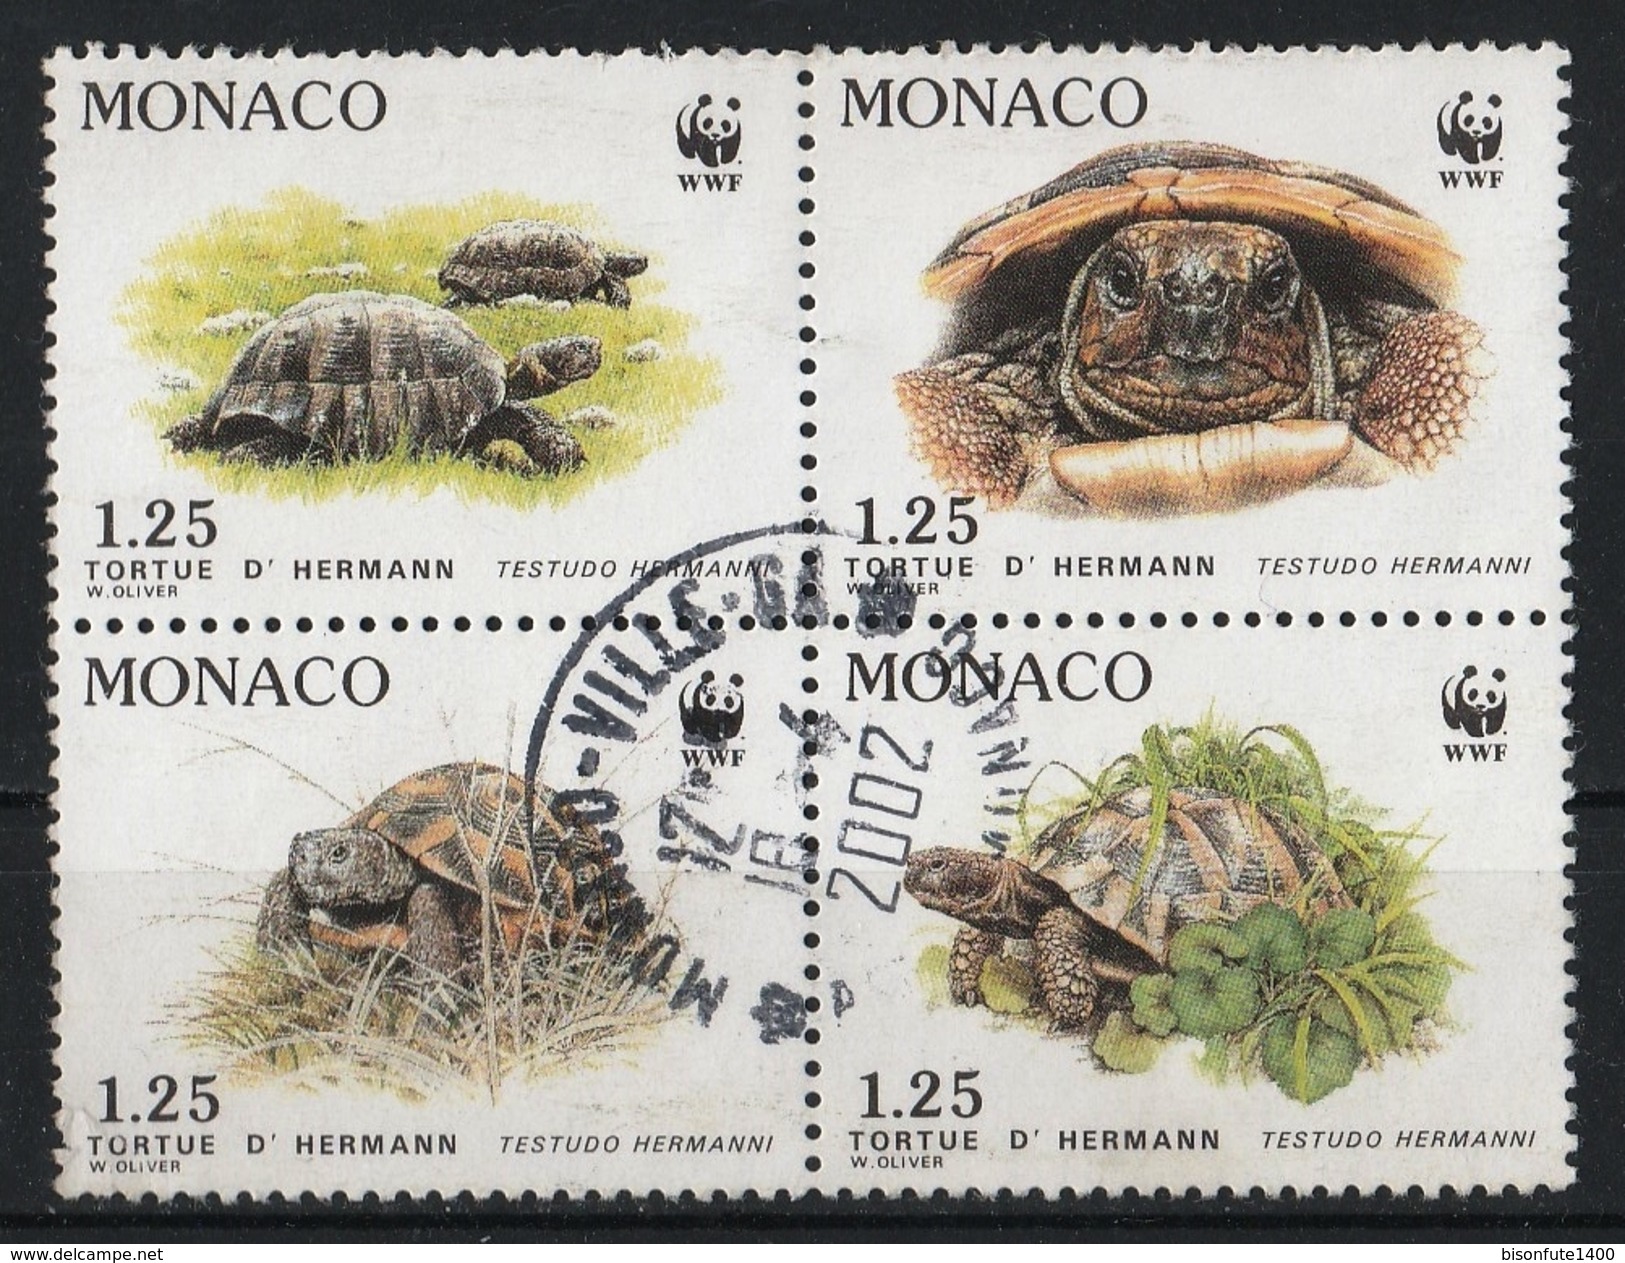 Monaco 1991 : Timbres Yvert & Tellier N° 1805 à 1808 ( Modèle 2 ). - Usados